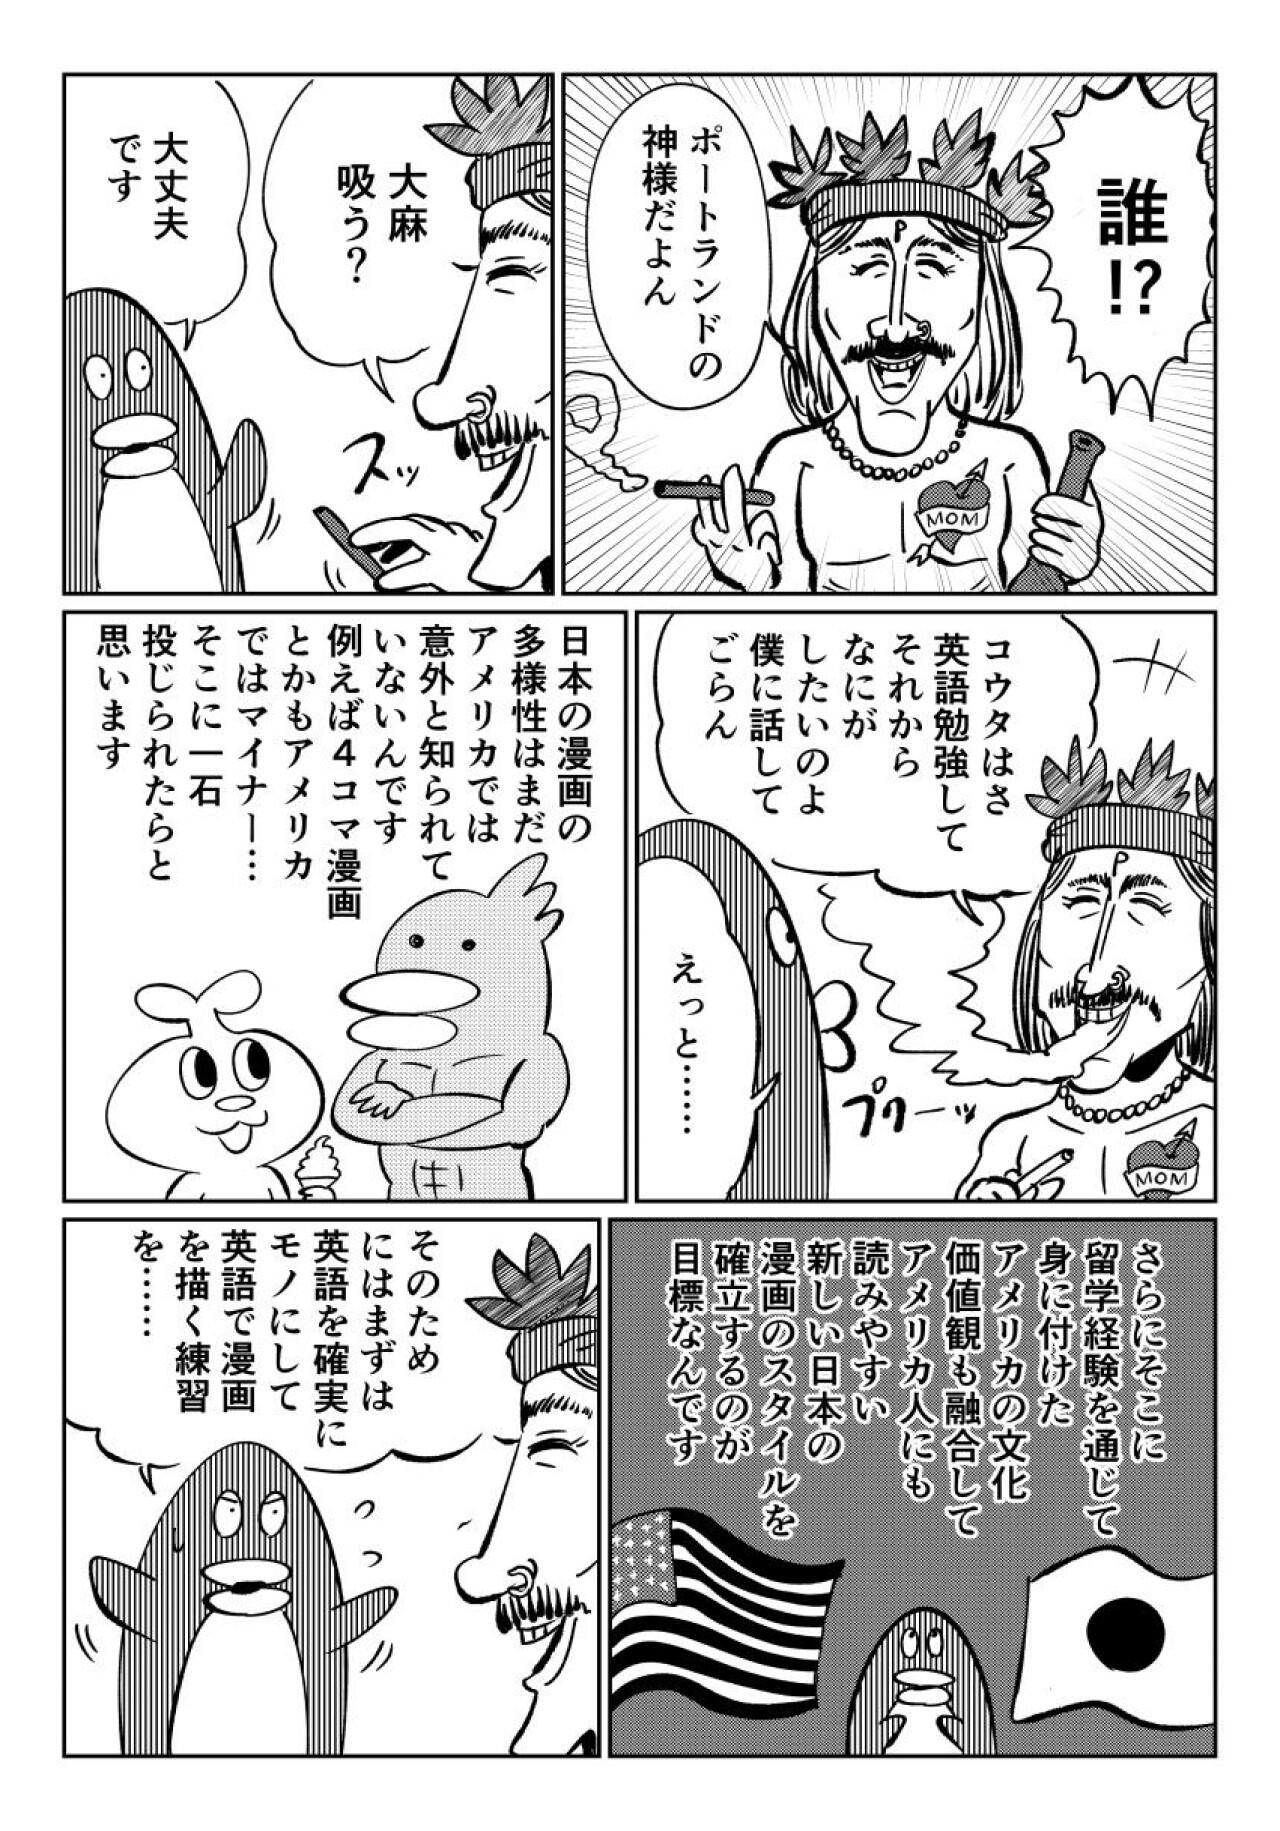 https://www.ryugaku.co.jp/column/images/34sai13_3_1280.jpg